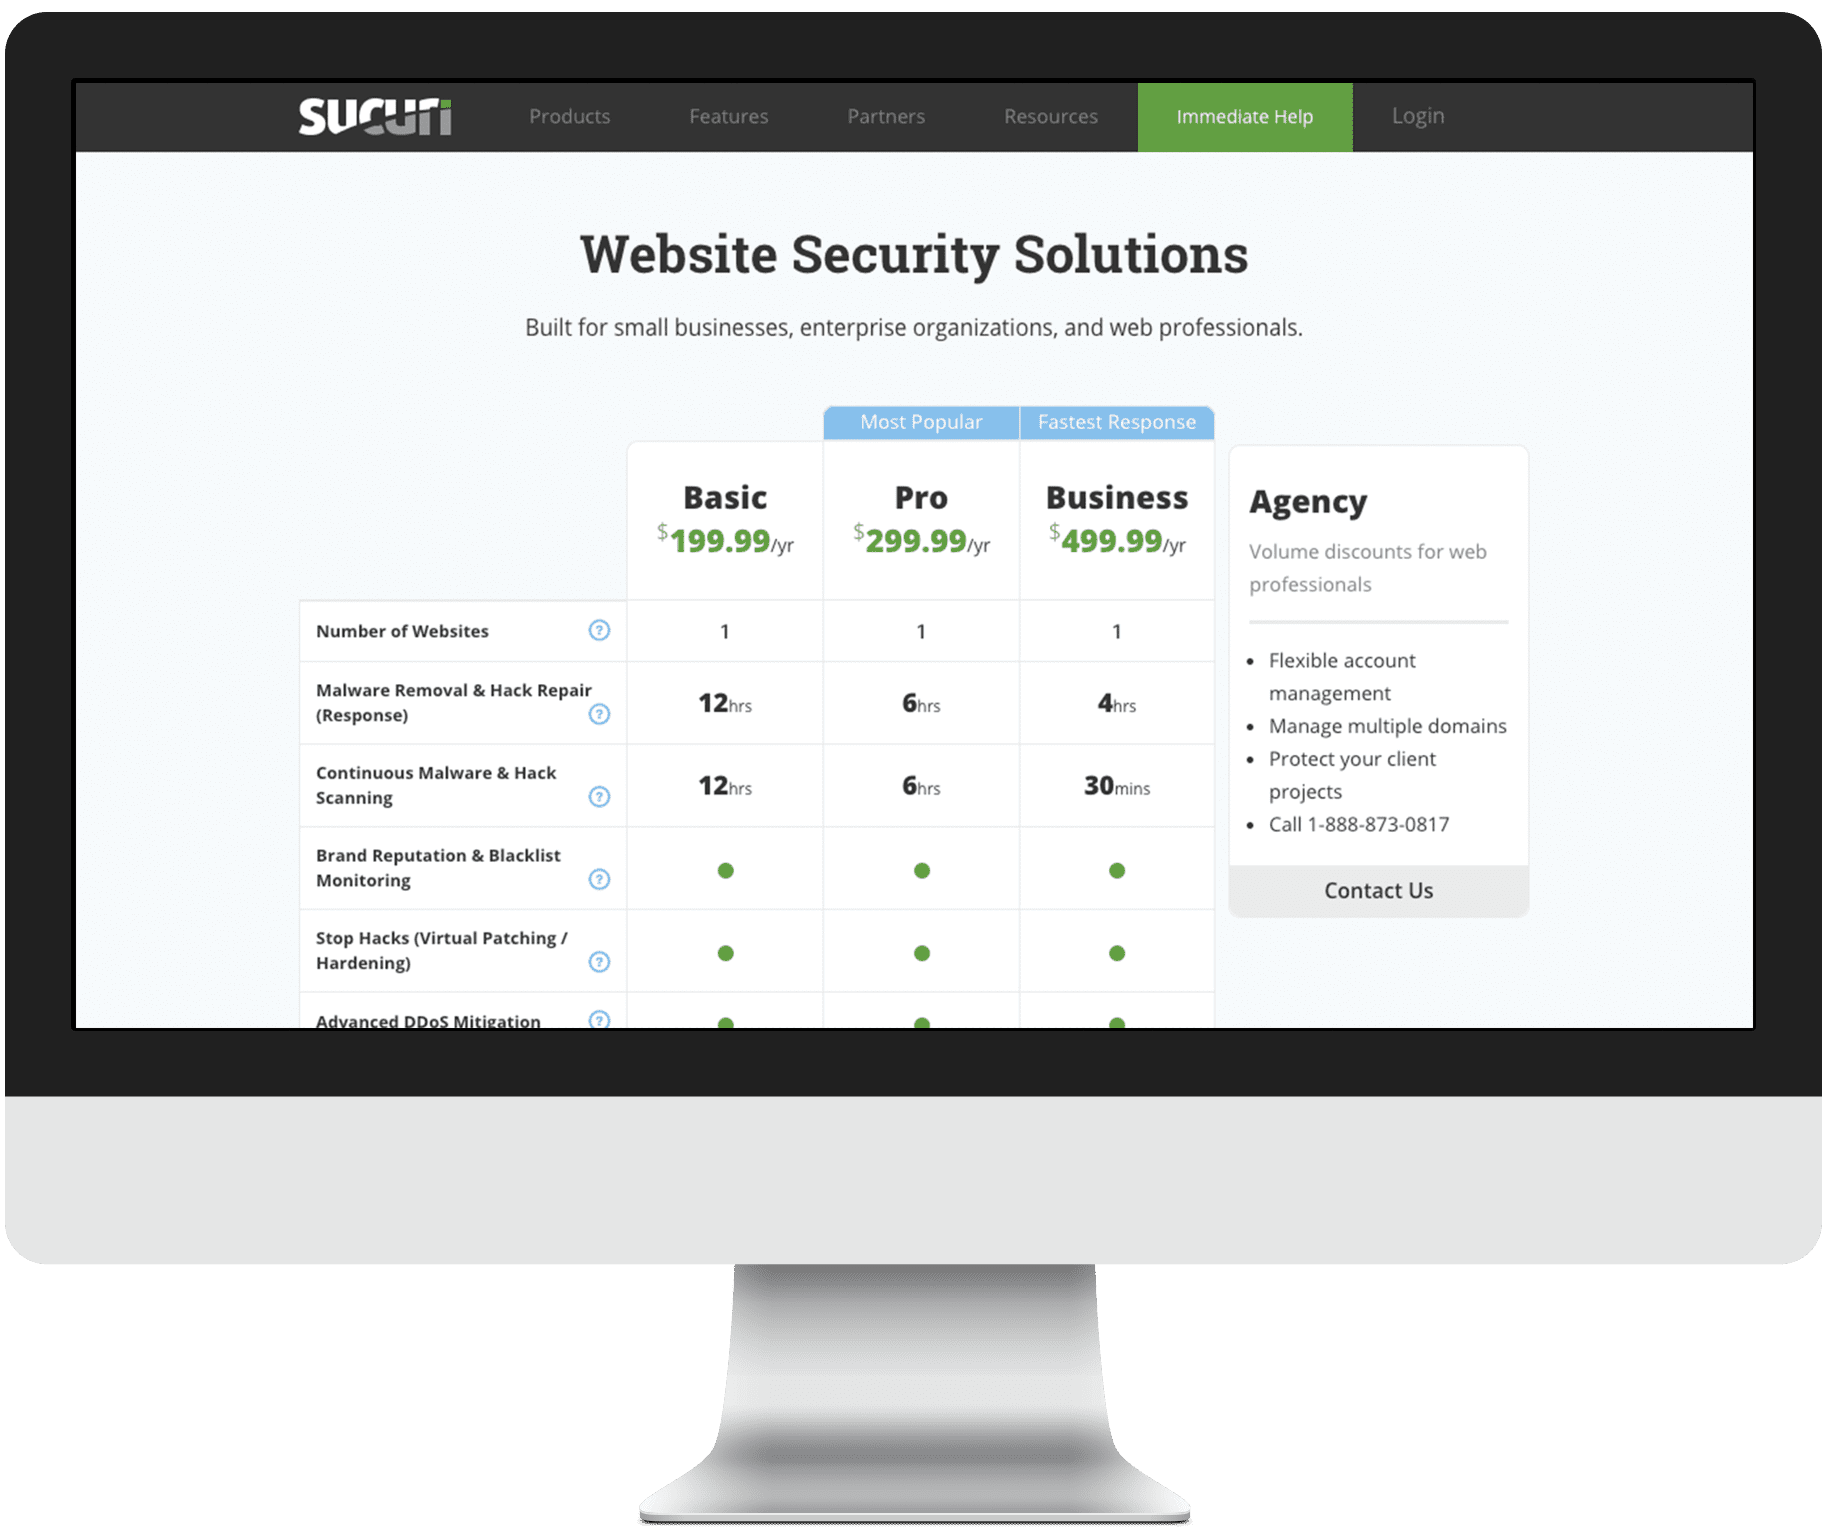 Sucri website security platform plan options screenshot on desktop display